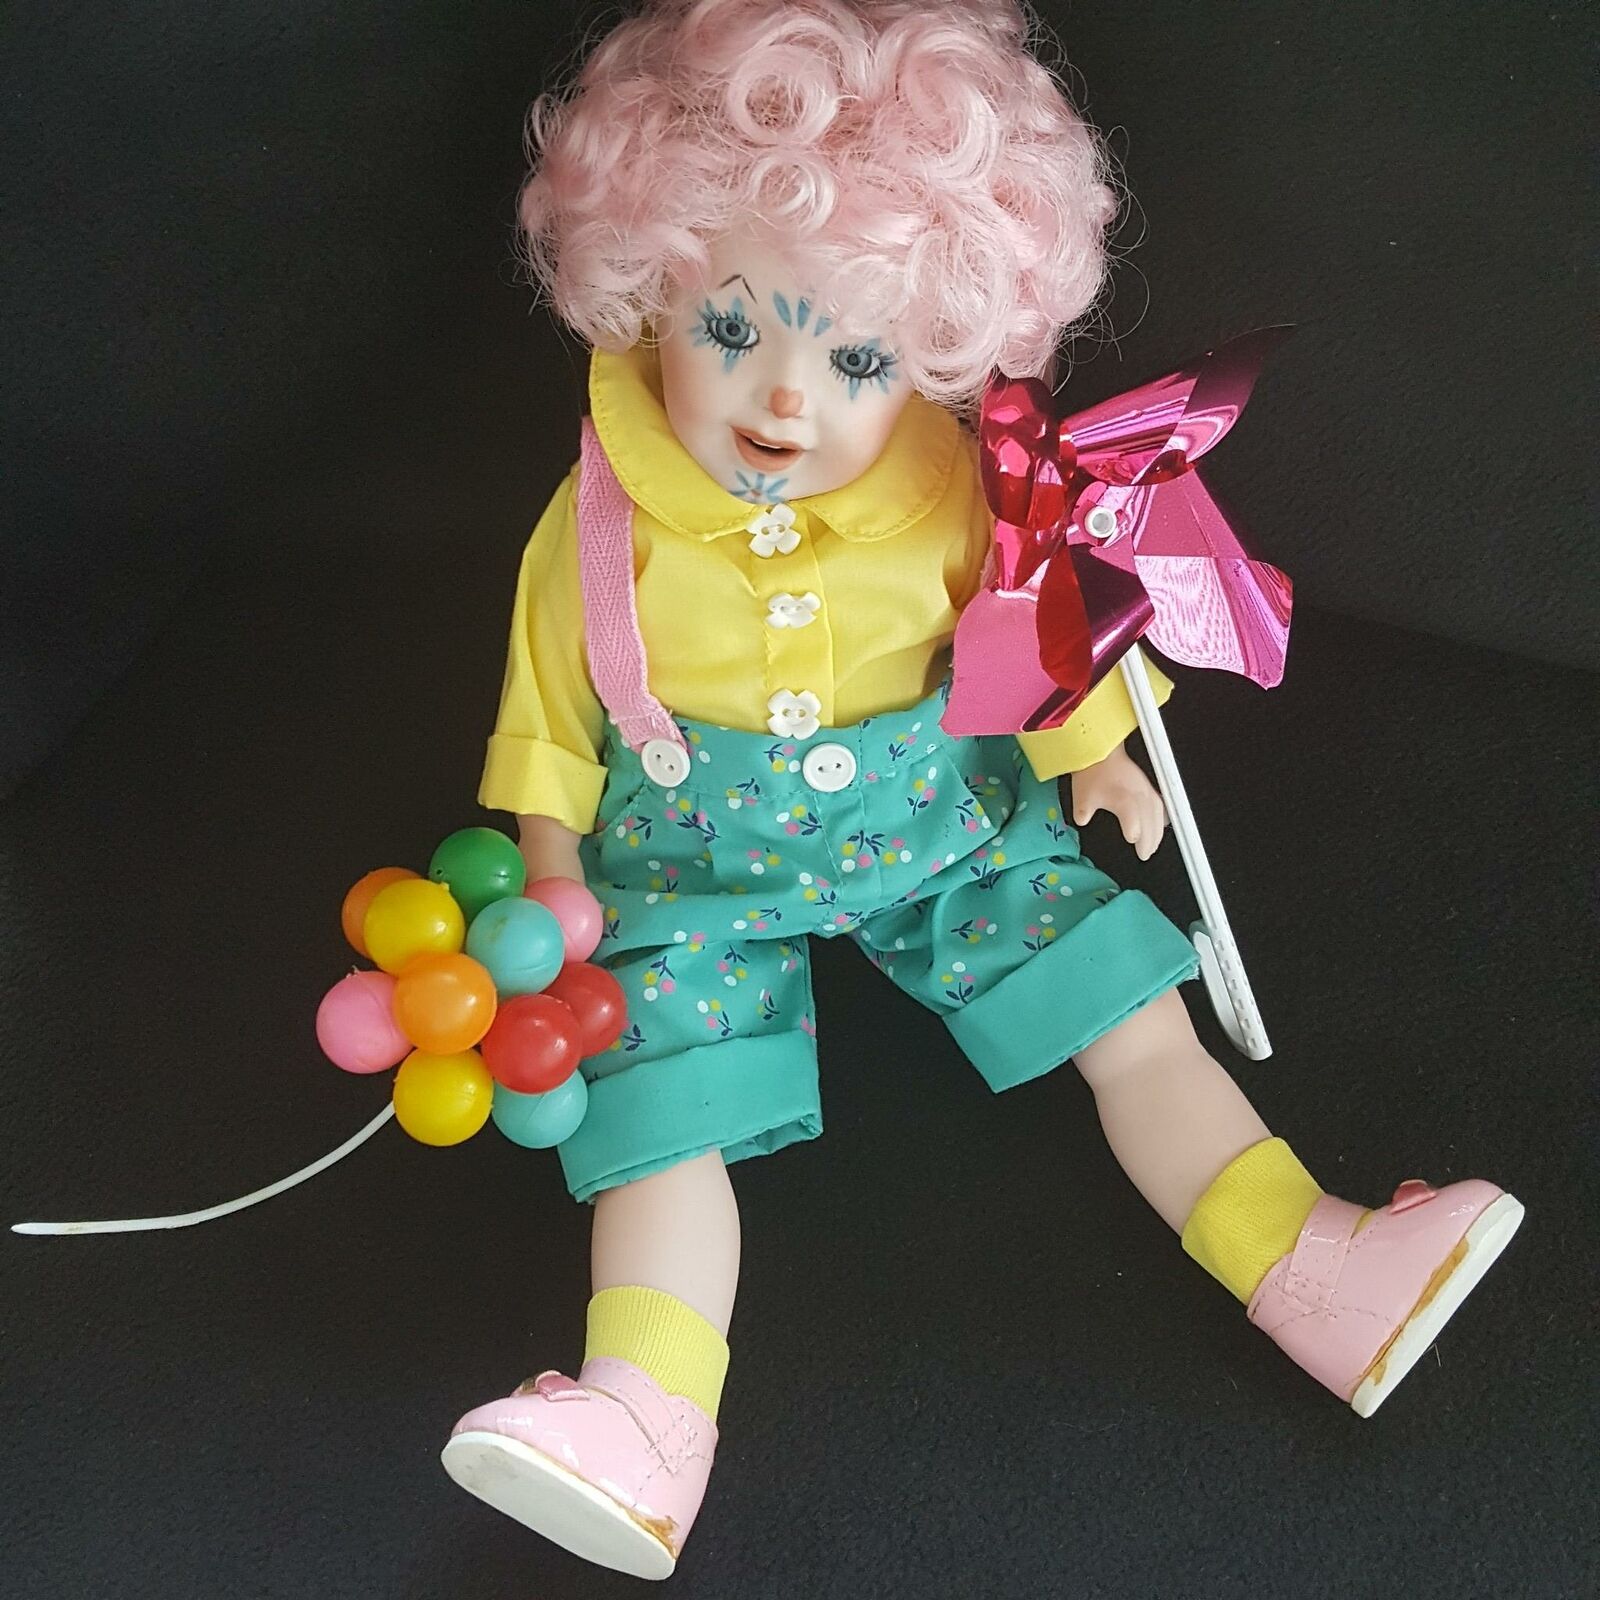 Circus Clown SFBJ Melissa LR Model 236 Porcelain Doll Pink Shoes Curley Hair